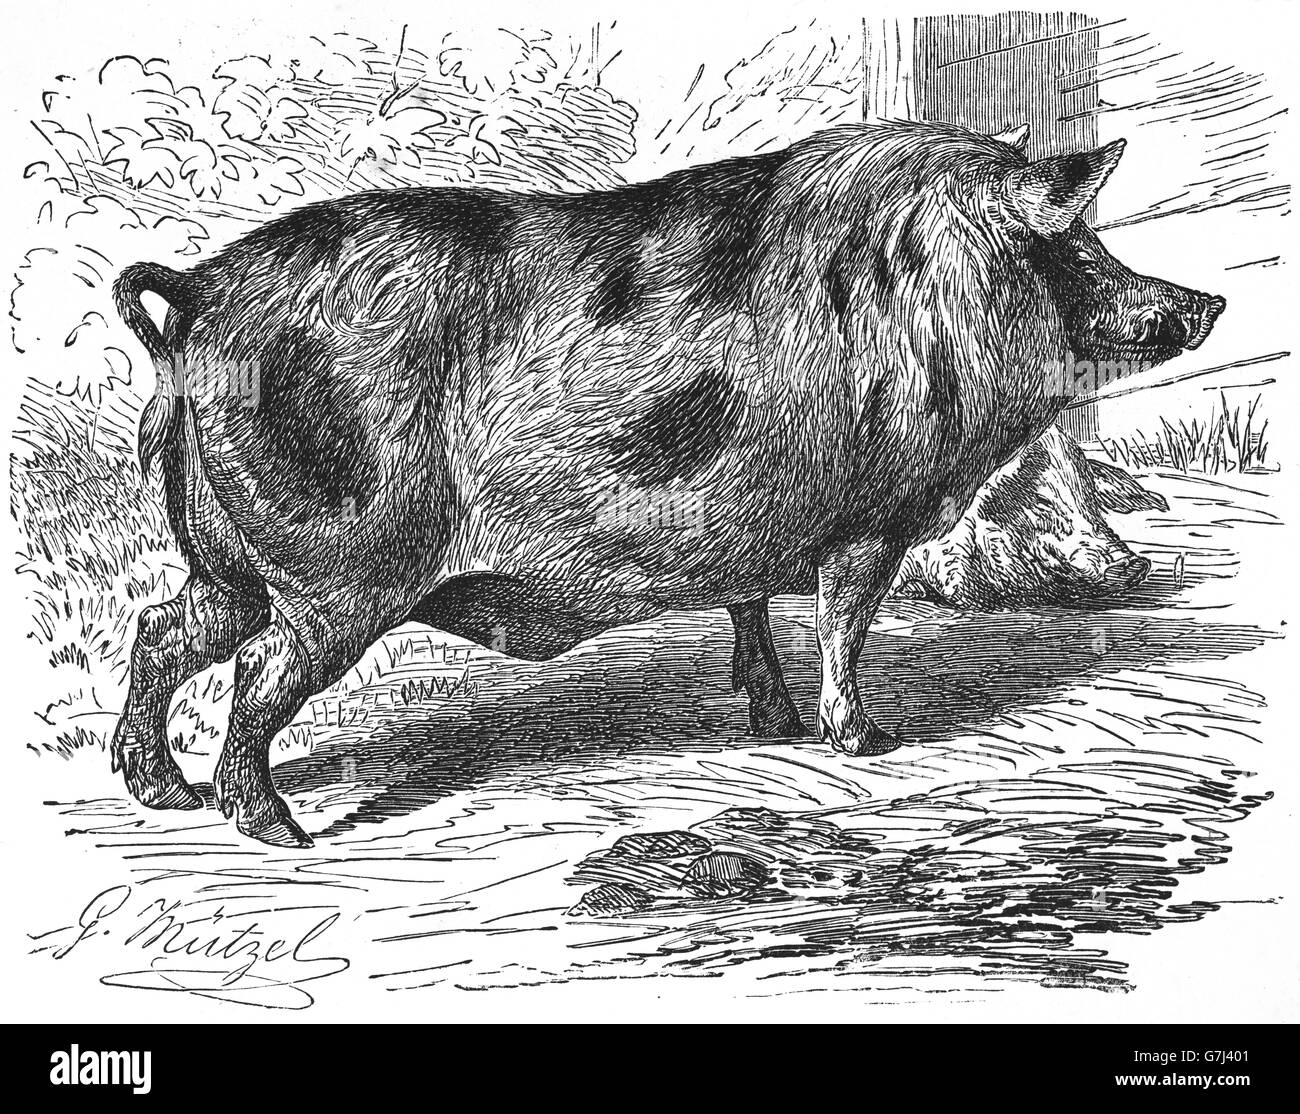 Hampshire pig, Domestic pig, Sus scrofa domesticus, Sus domesticus, swine, hog, illustration from book dated 1904 Stock Photo